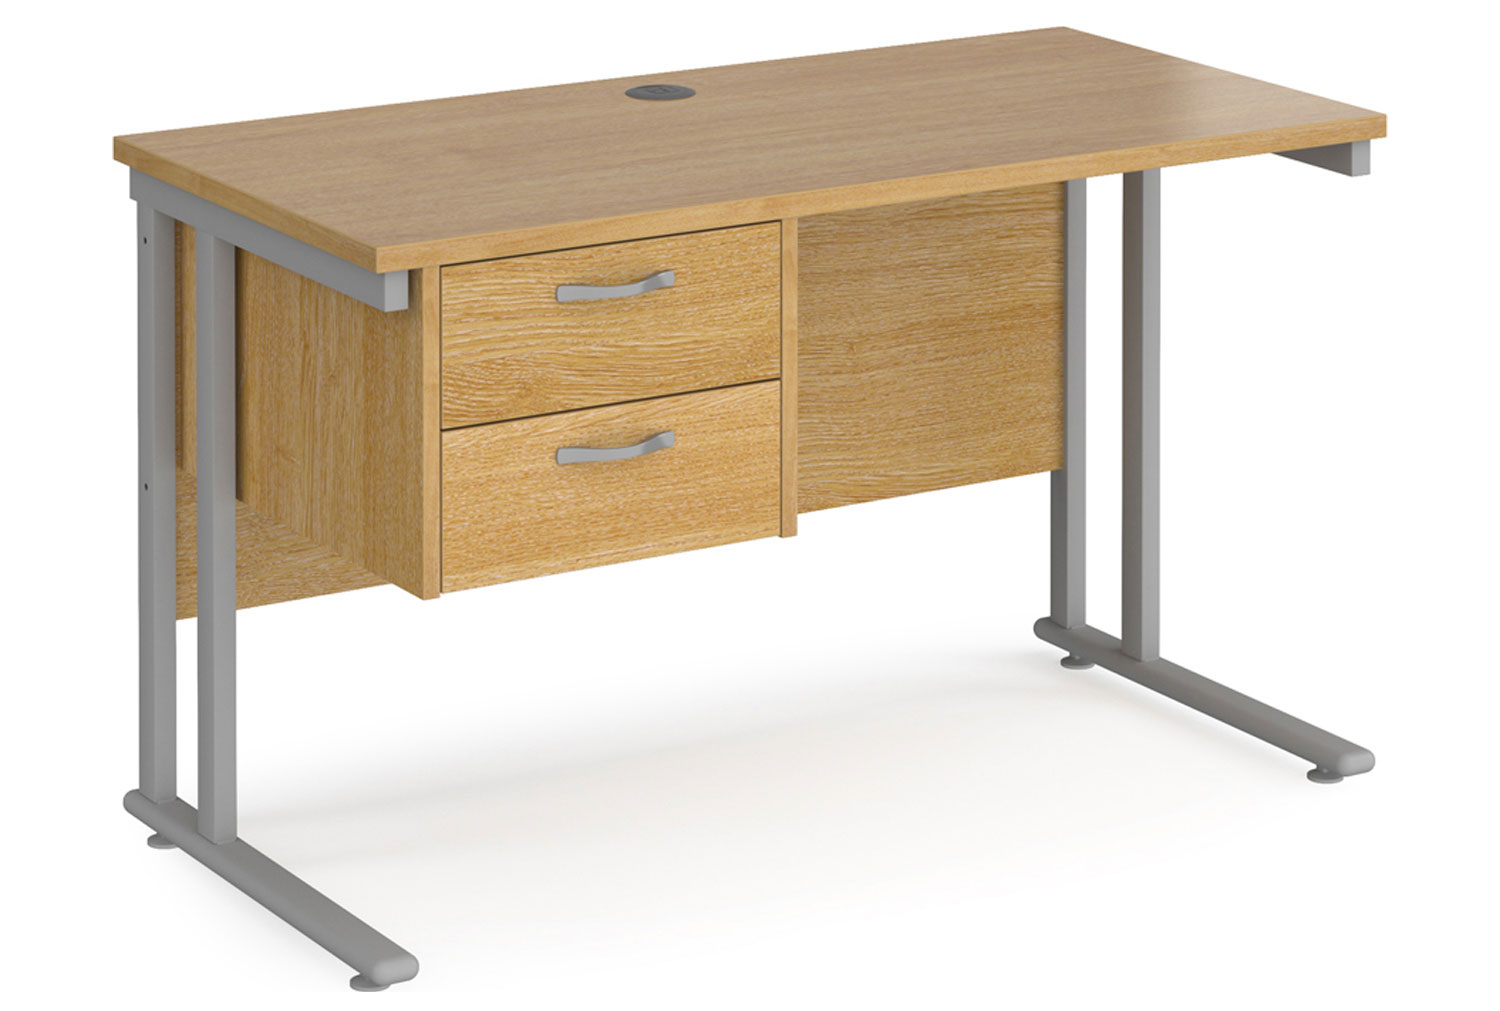 Value Line Deluxe C-Leg Narrow Rectangular Office Desk 2 Drawers (Silver Legs), 120w60dx73h (cm), Oak